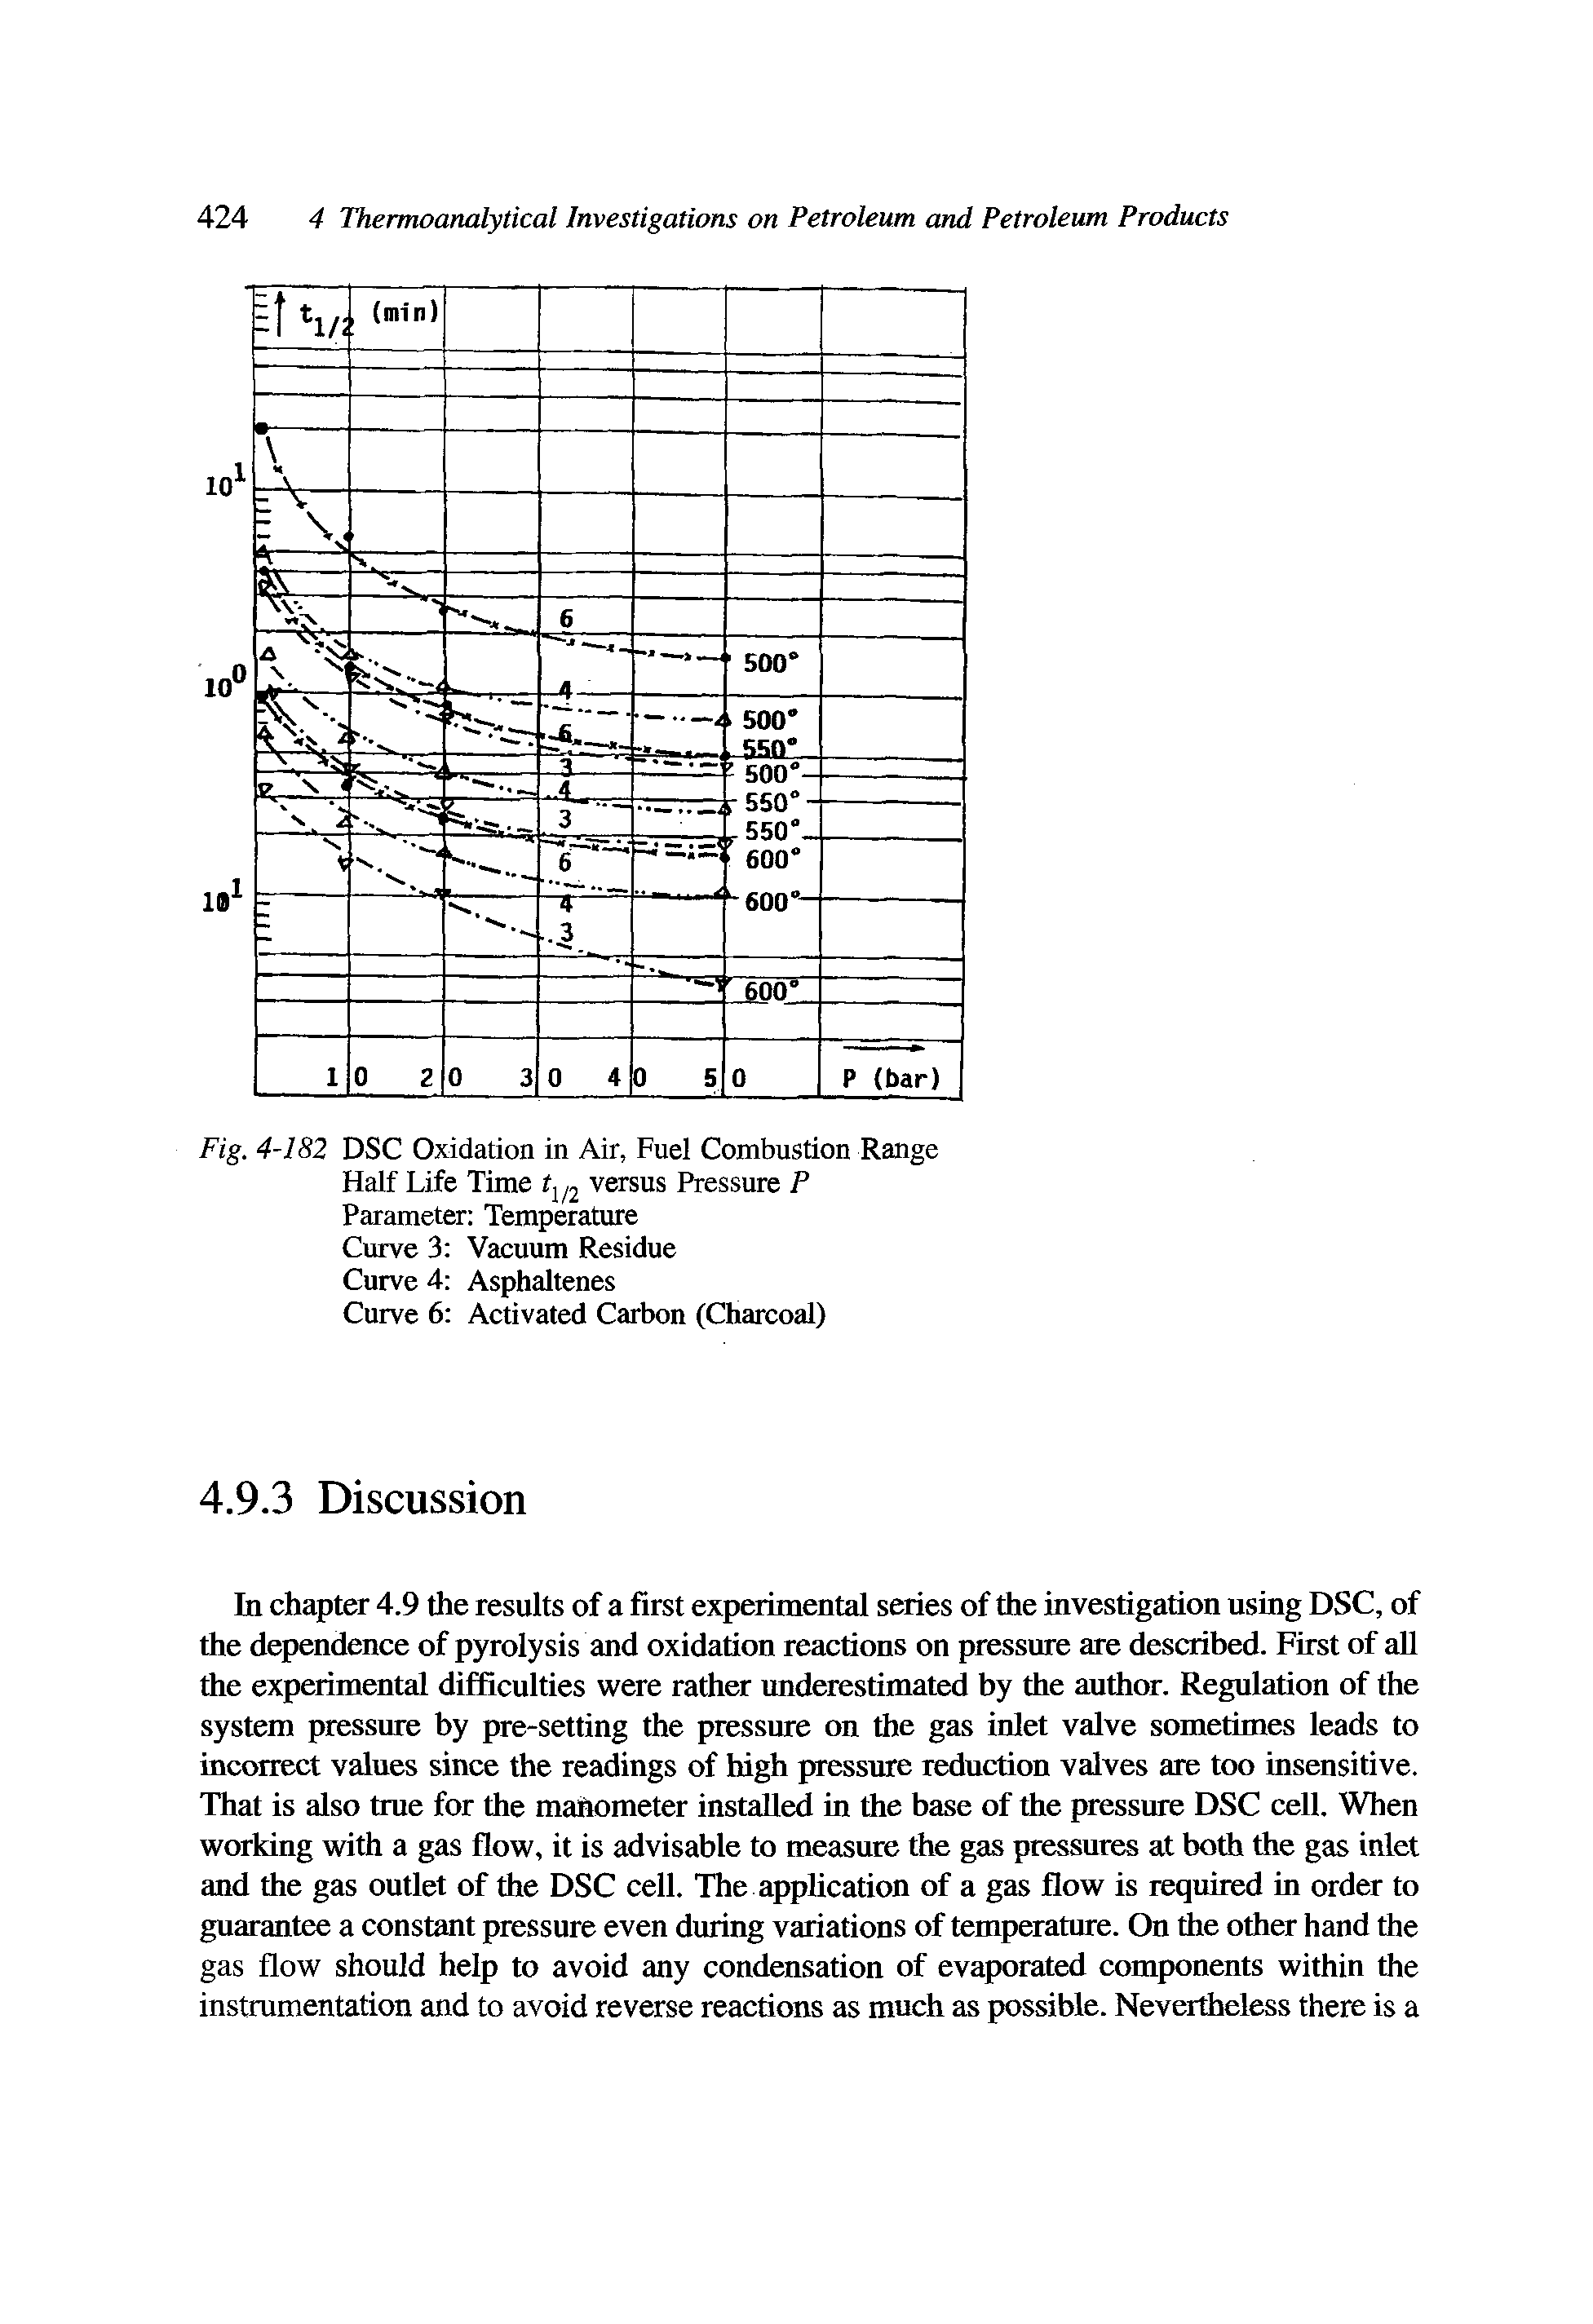 Fig. 4-182 DSC Oxidation in Air, Fuel Combustion Range Half Life Time fj 2 versus Pressure P Parameter Temperature Curve 3 Vacuum Residue Curve 4 Asphaltenes Curve 6 Activated Carbon (Charcoal)...